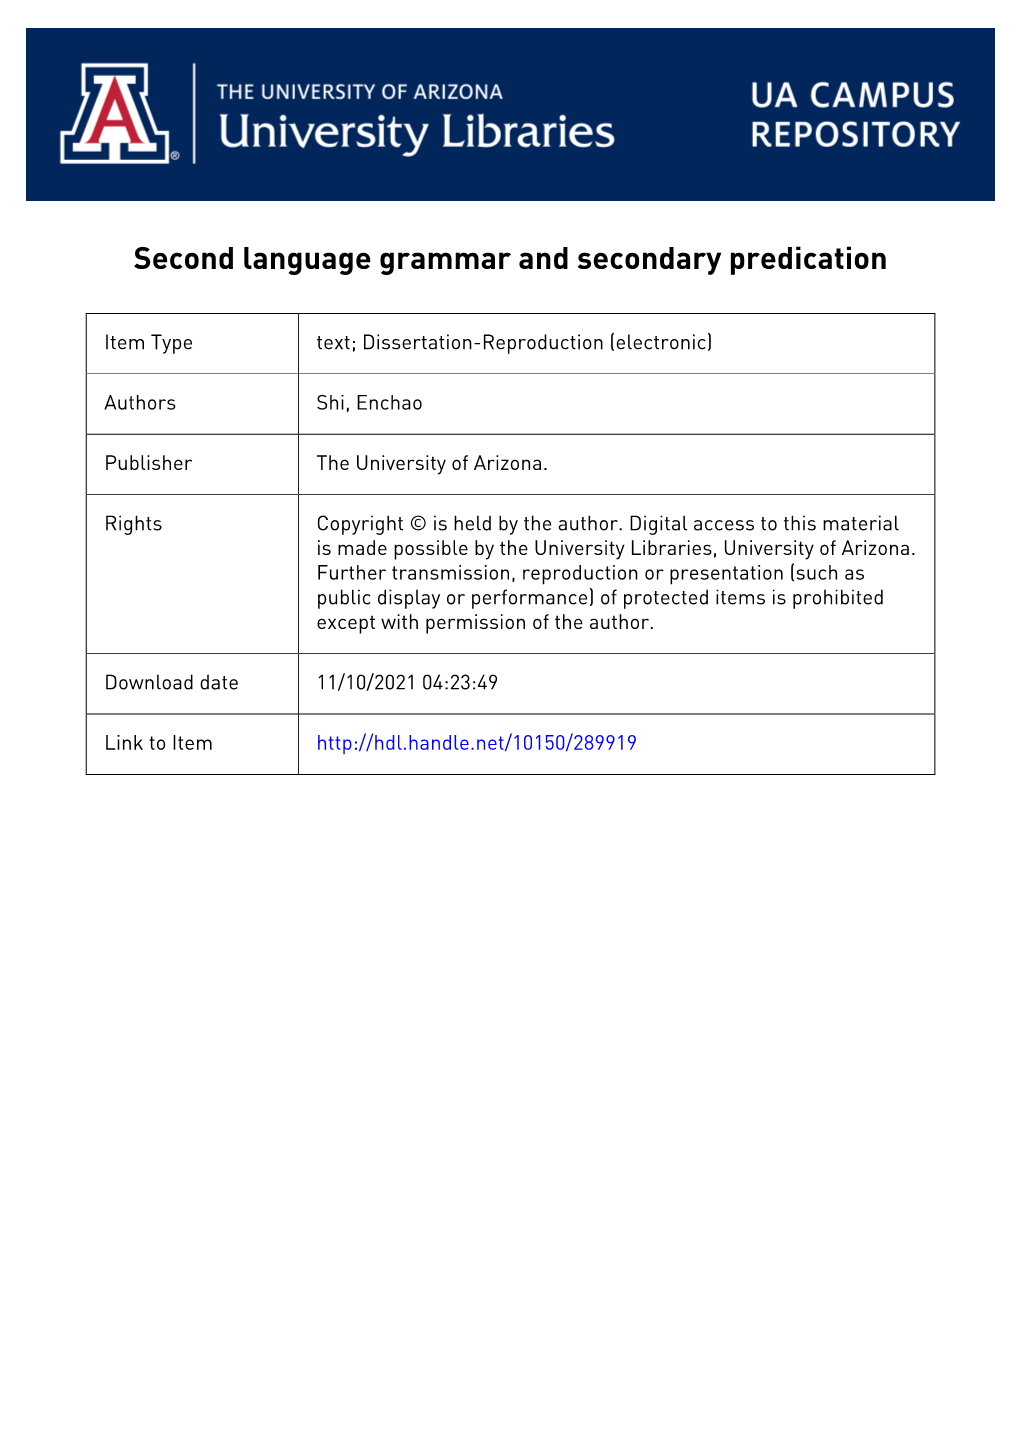 Second Language Grammar and Secondary Predication